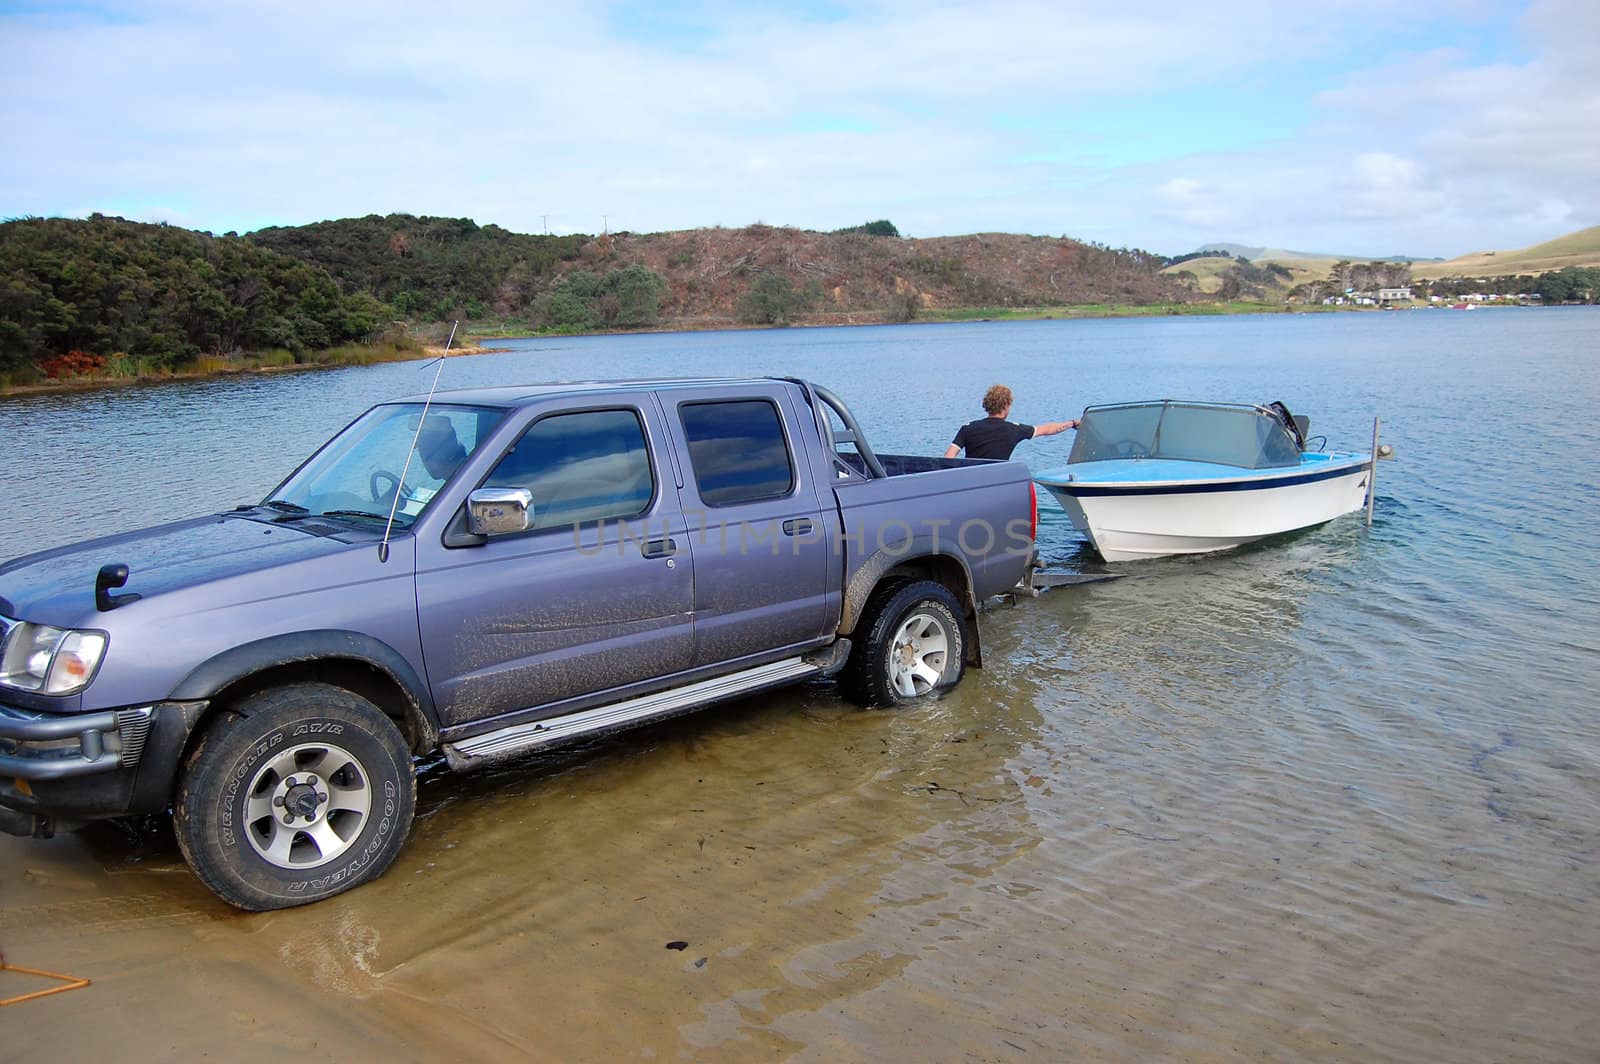 Car with boat trailer at lake, New Zealand